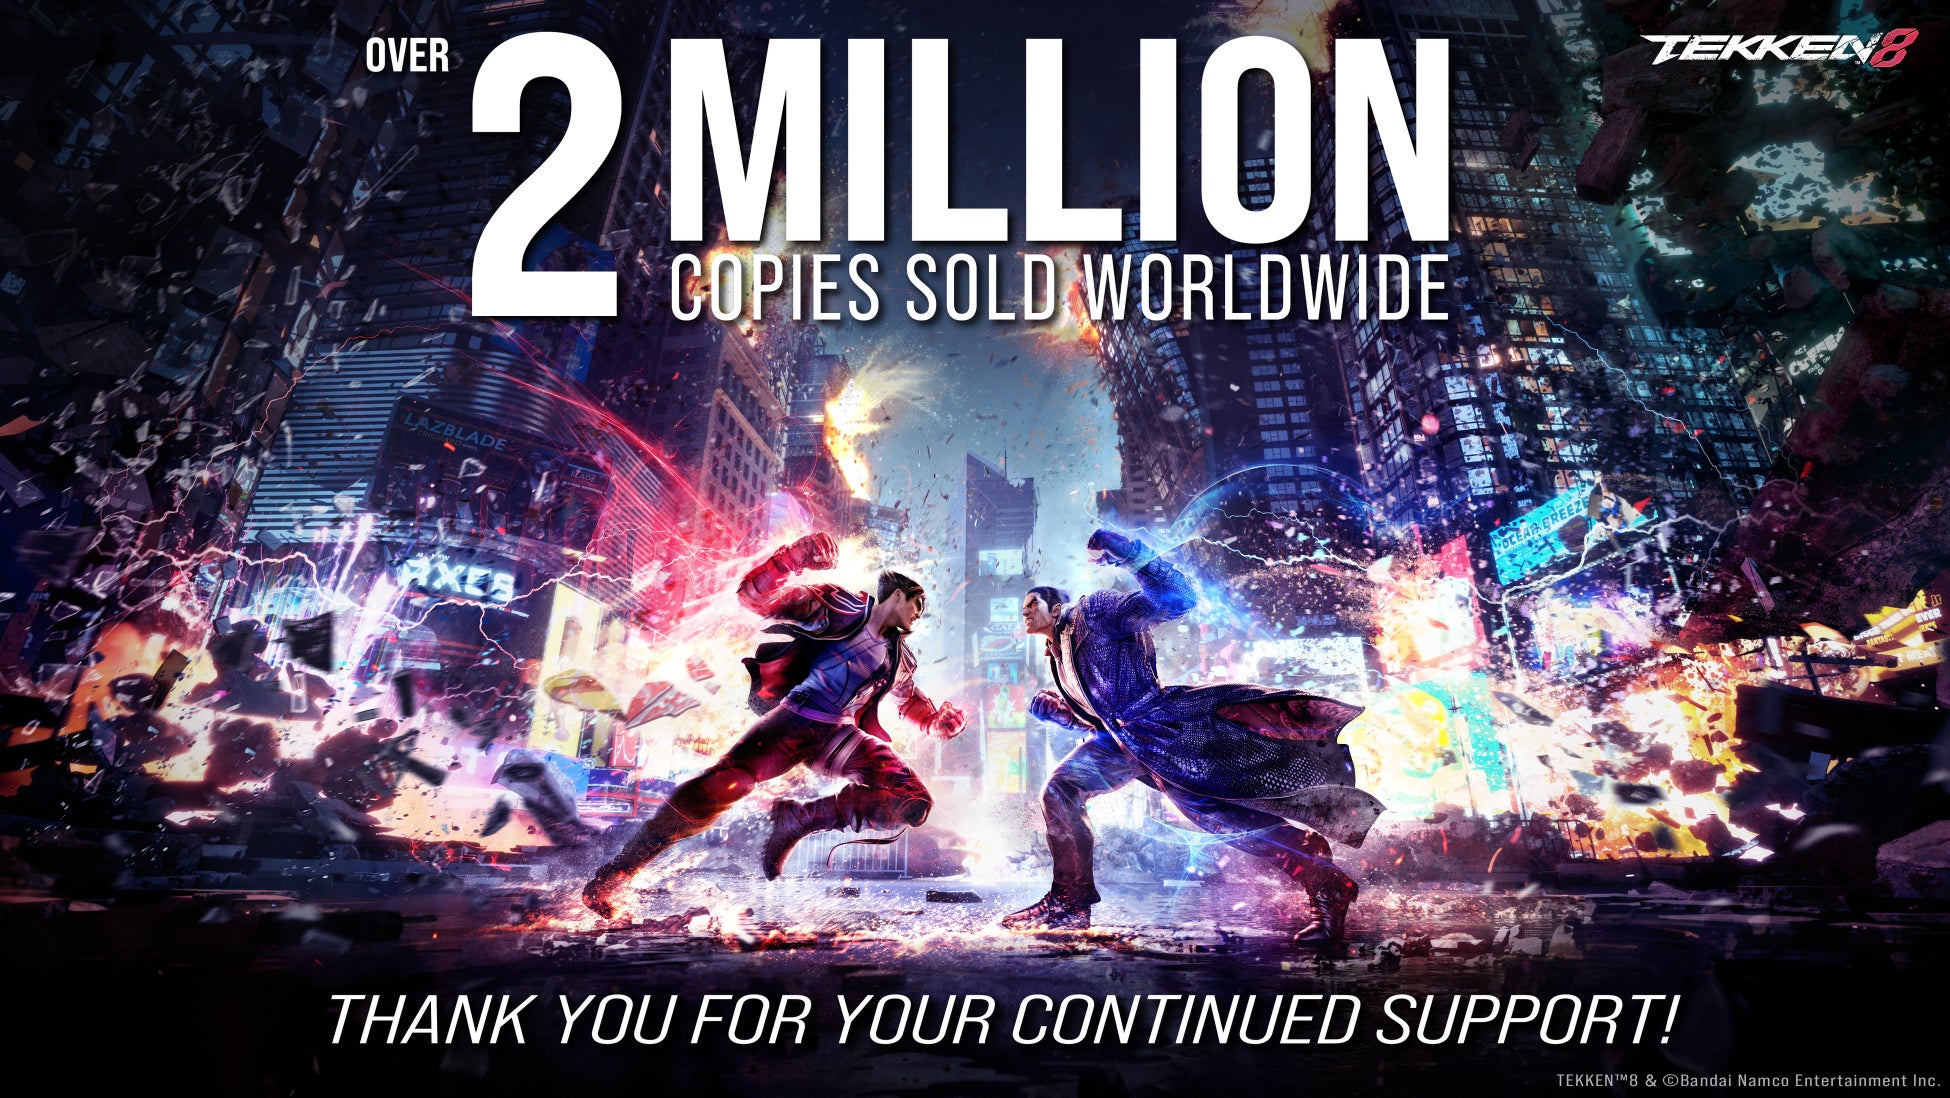 3D対戦格闘ゲーム『鉄拳』シリーズ最新作『鉄拳8』が発売1か月で世界累計出荷本数200万本を突破